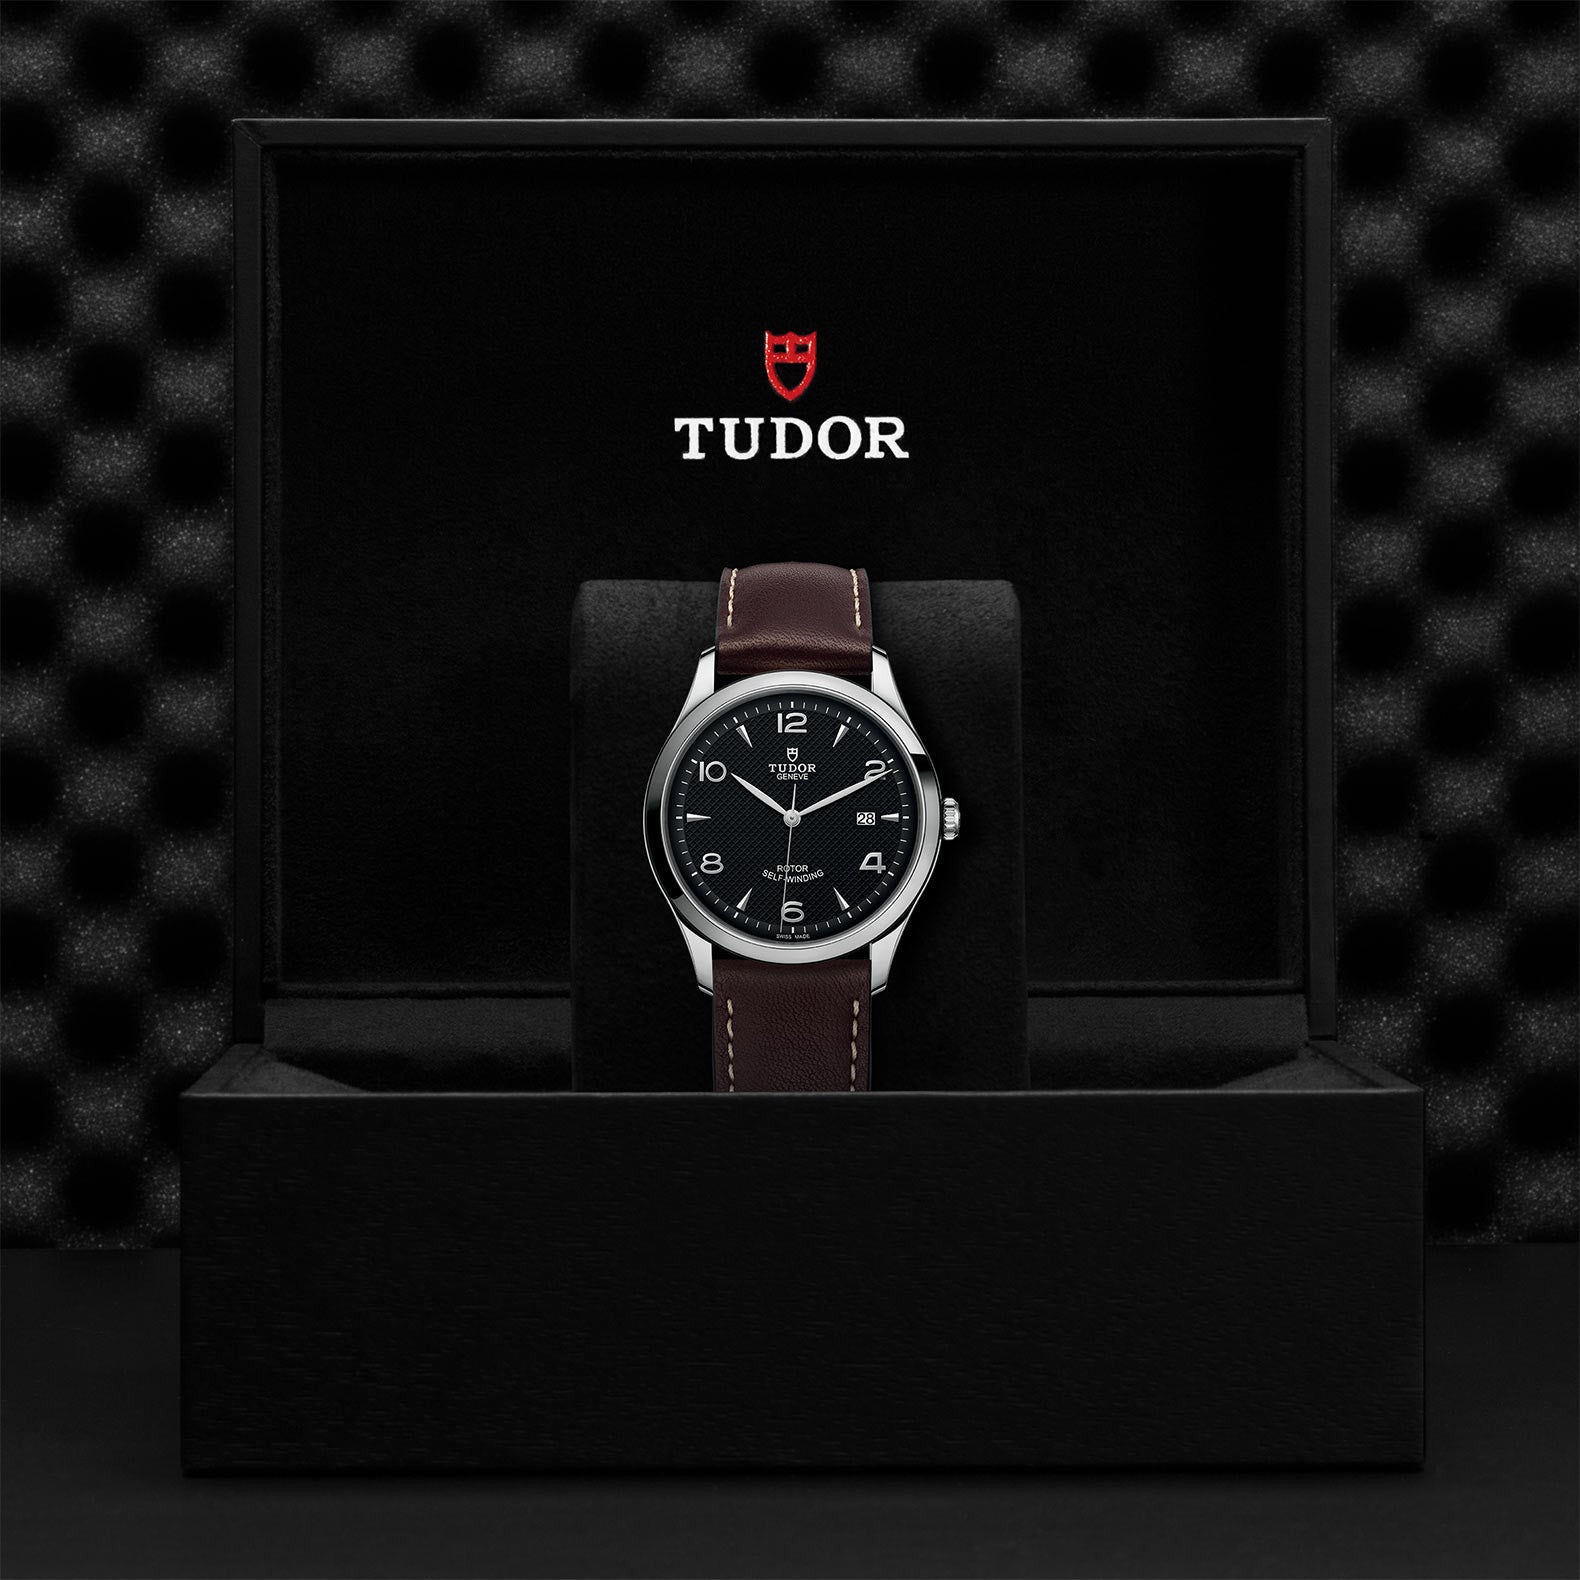 TUDOR Watch TUDOR 1926 41mm Case, Black Dial, Leather Bracelet (M91650-0008)